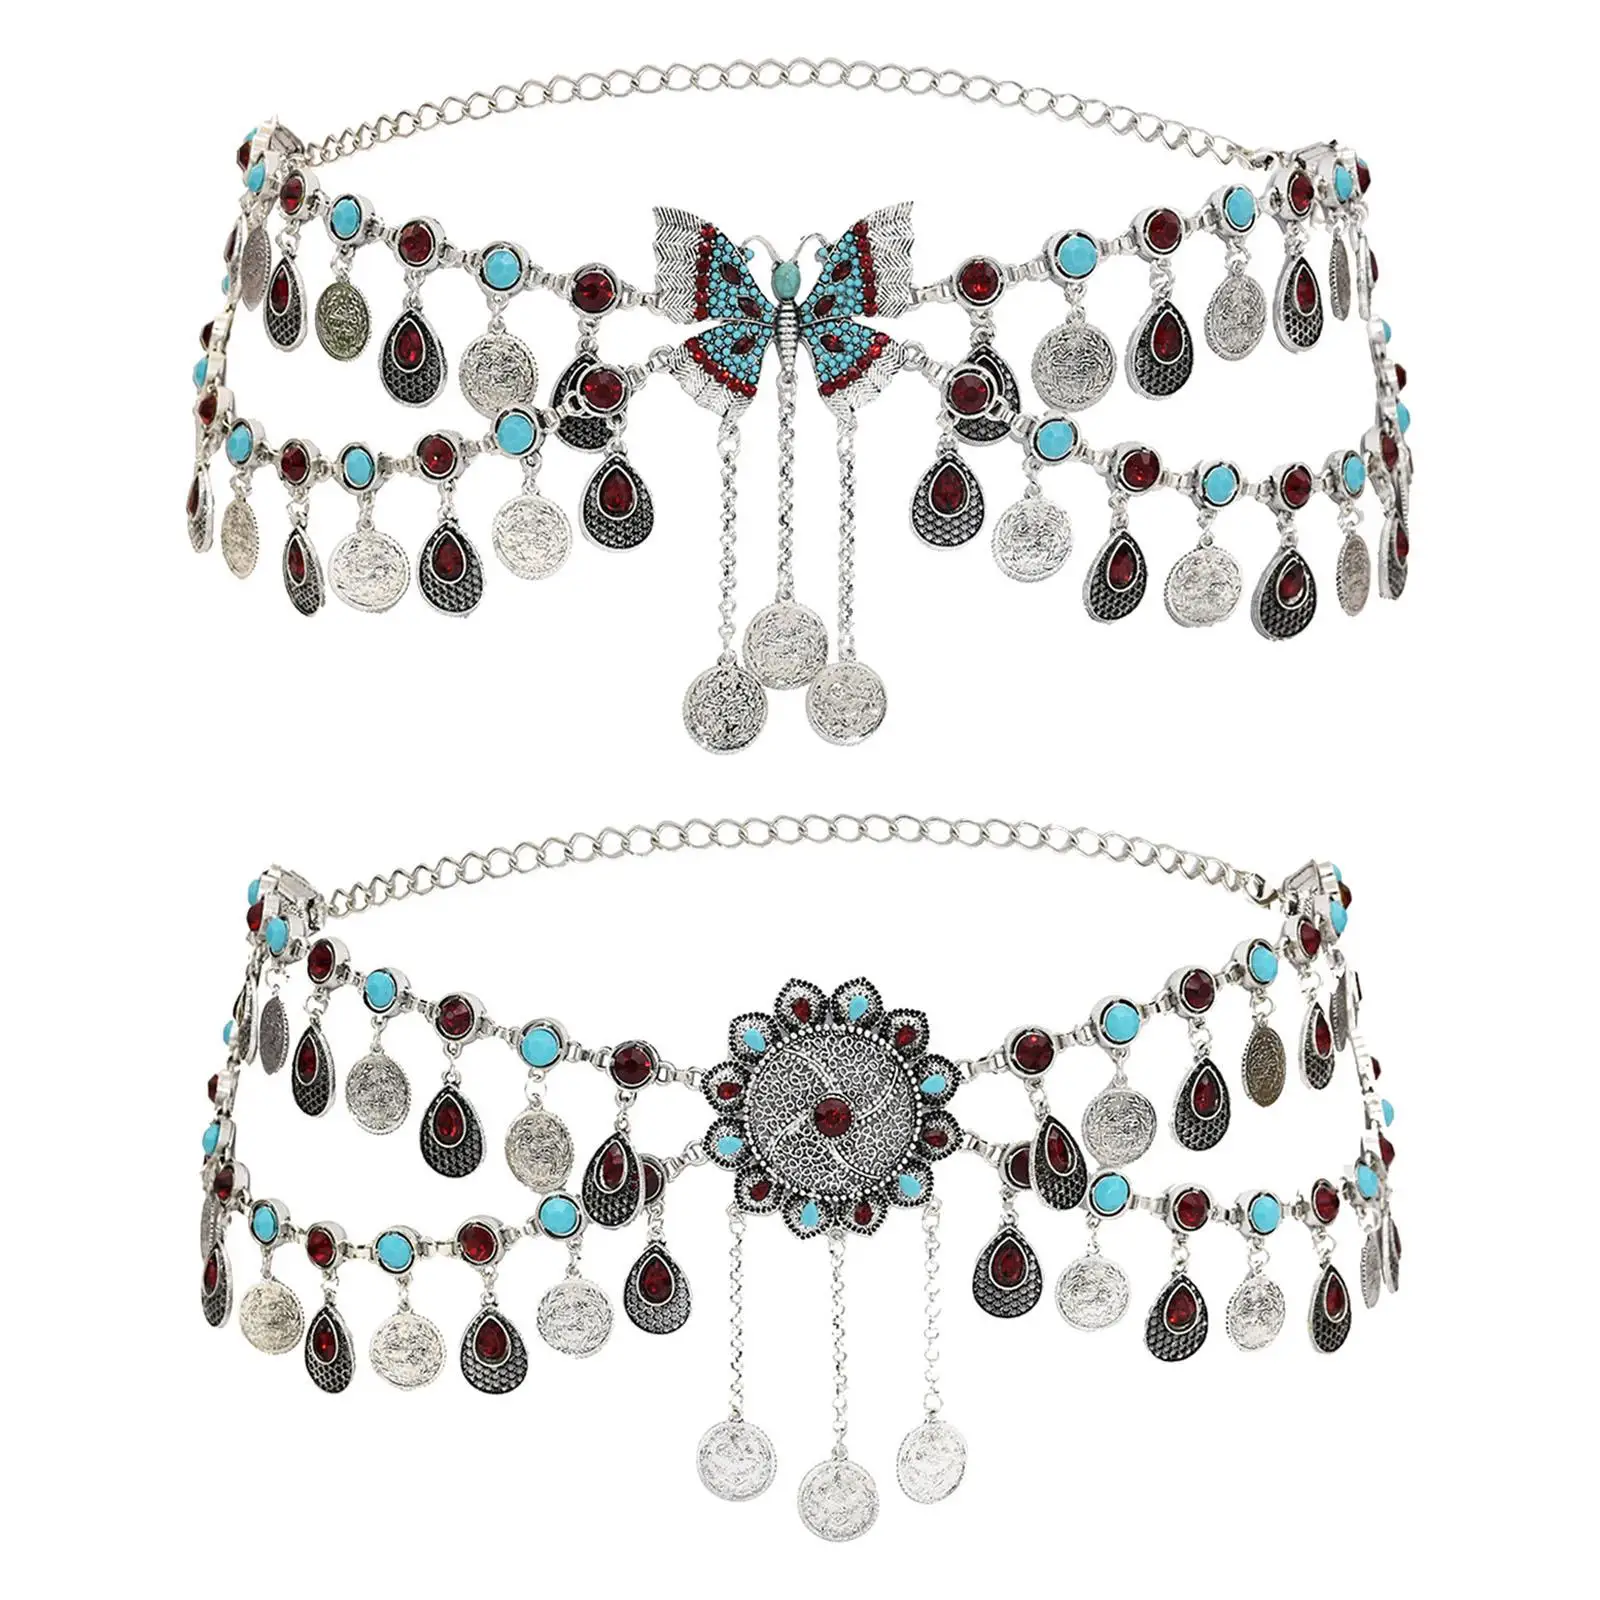 Belly Body Chain Waist Chain Jewelry Silver Color Coin Tassels Pendant Costume Rhinestone Turkish Gypsy Beach Belt for Women